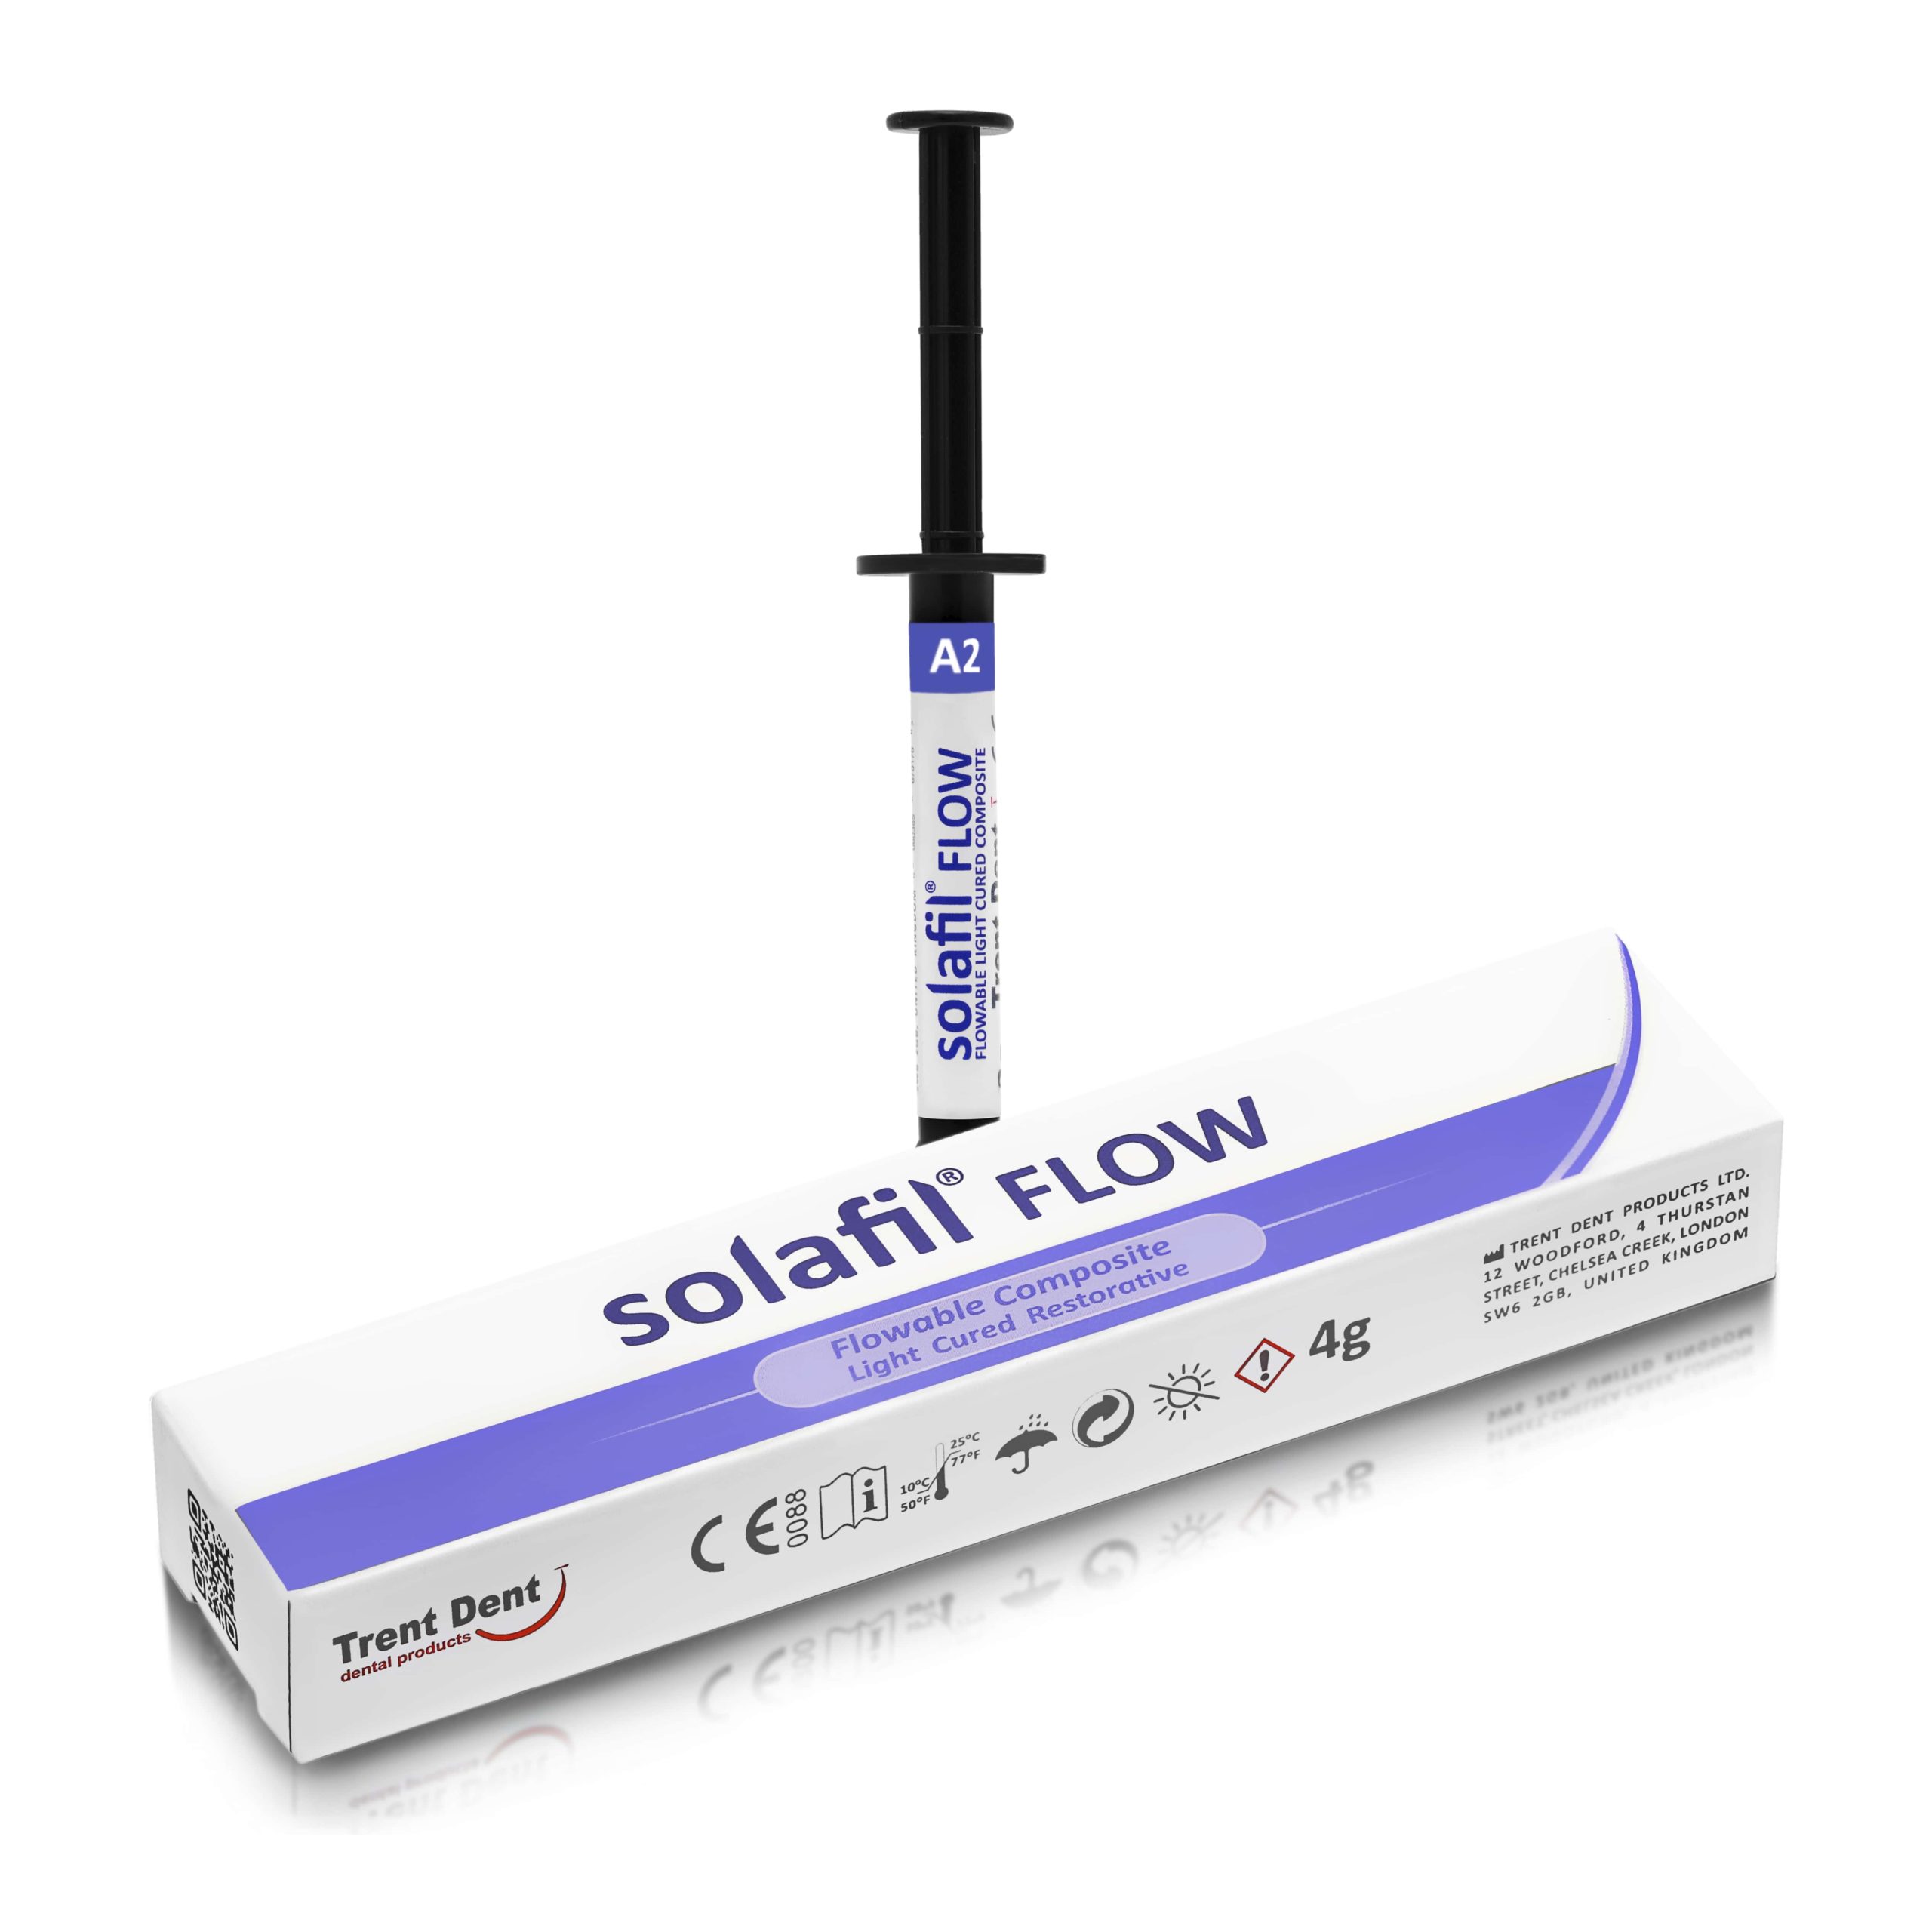 Solafil Flow Composite Trent Dent